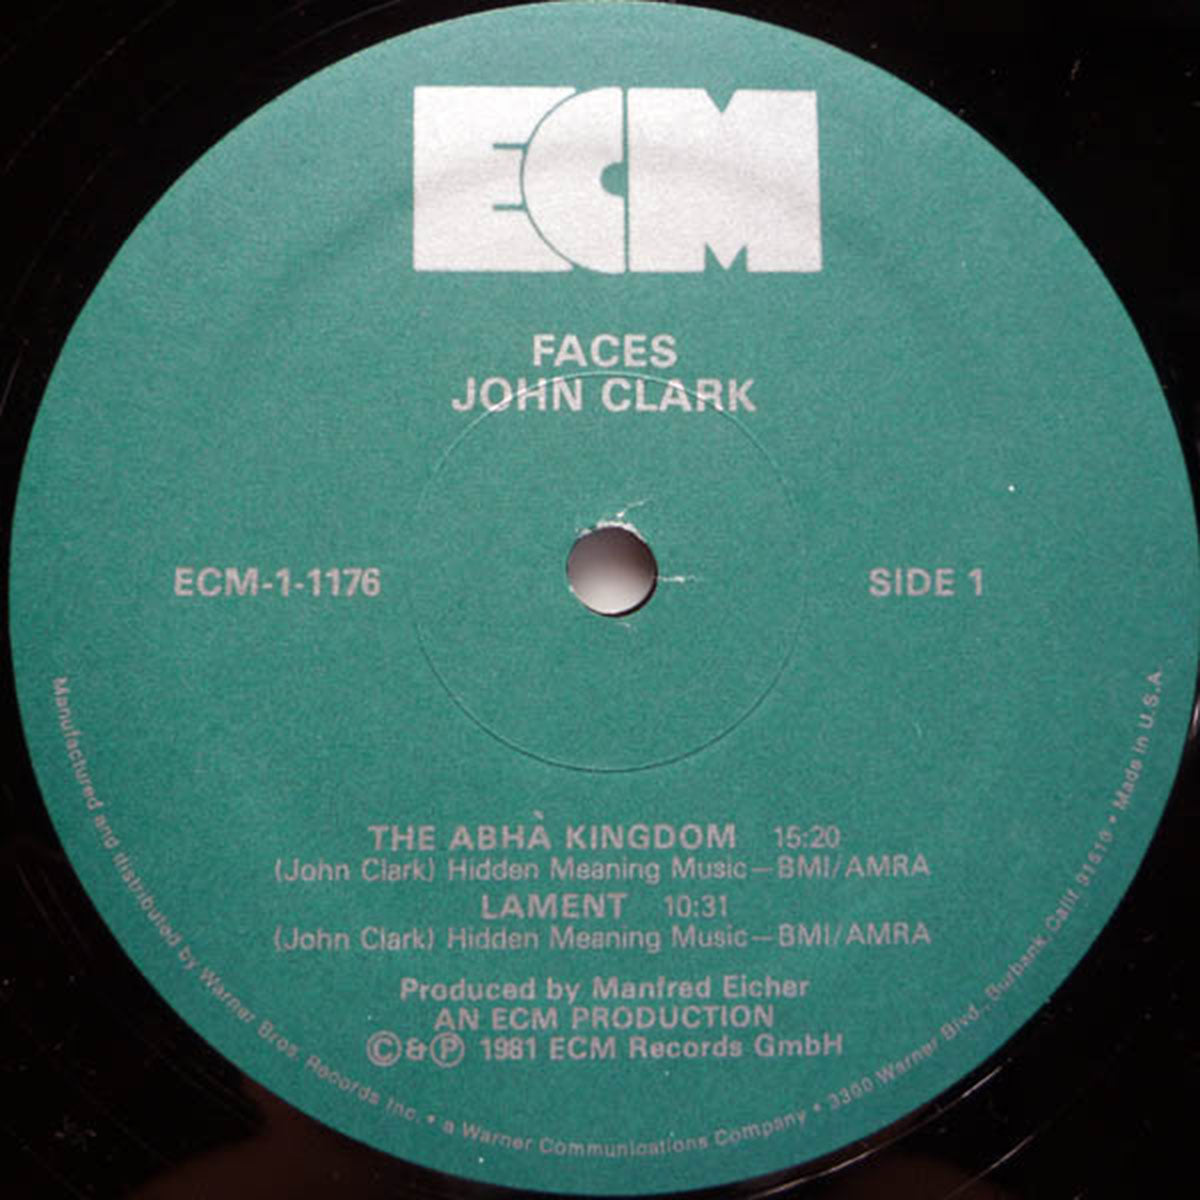 John Clark – Faces - 1981 US Pressing